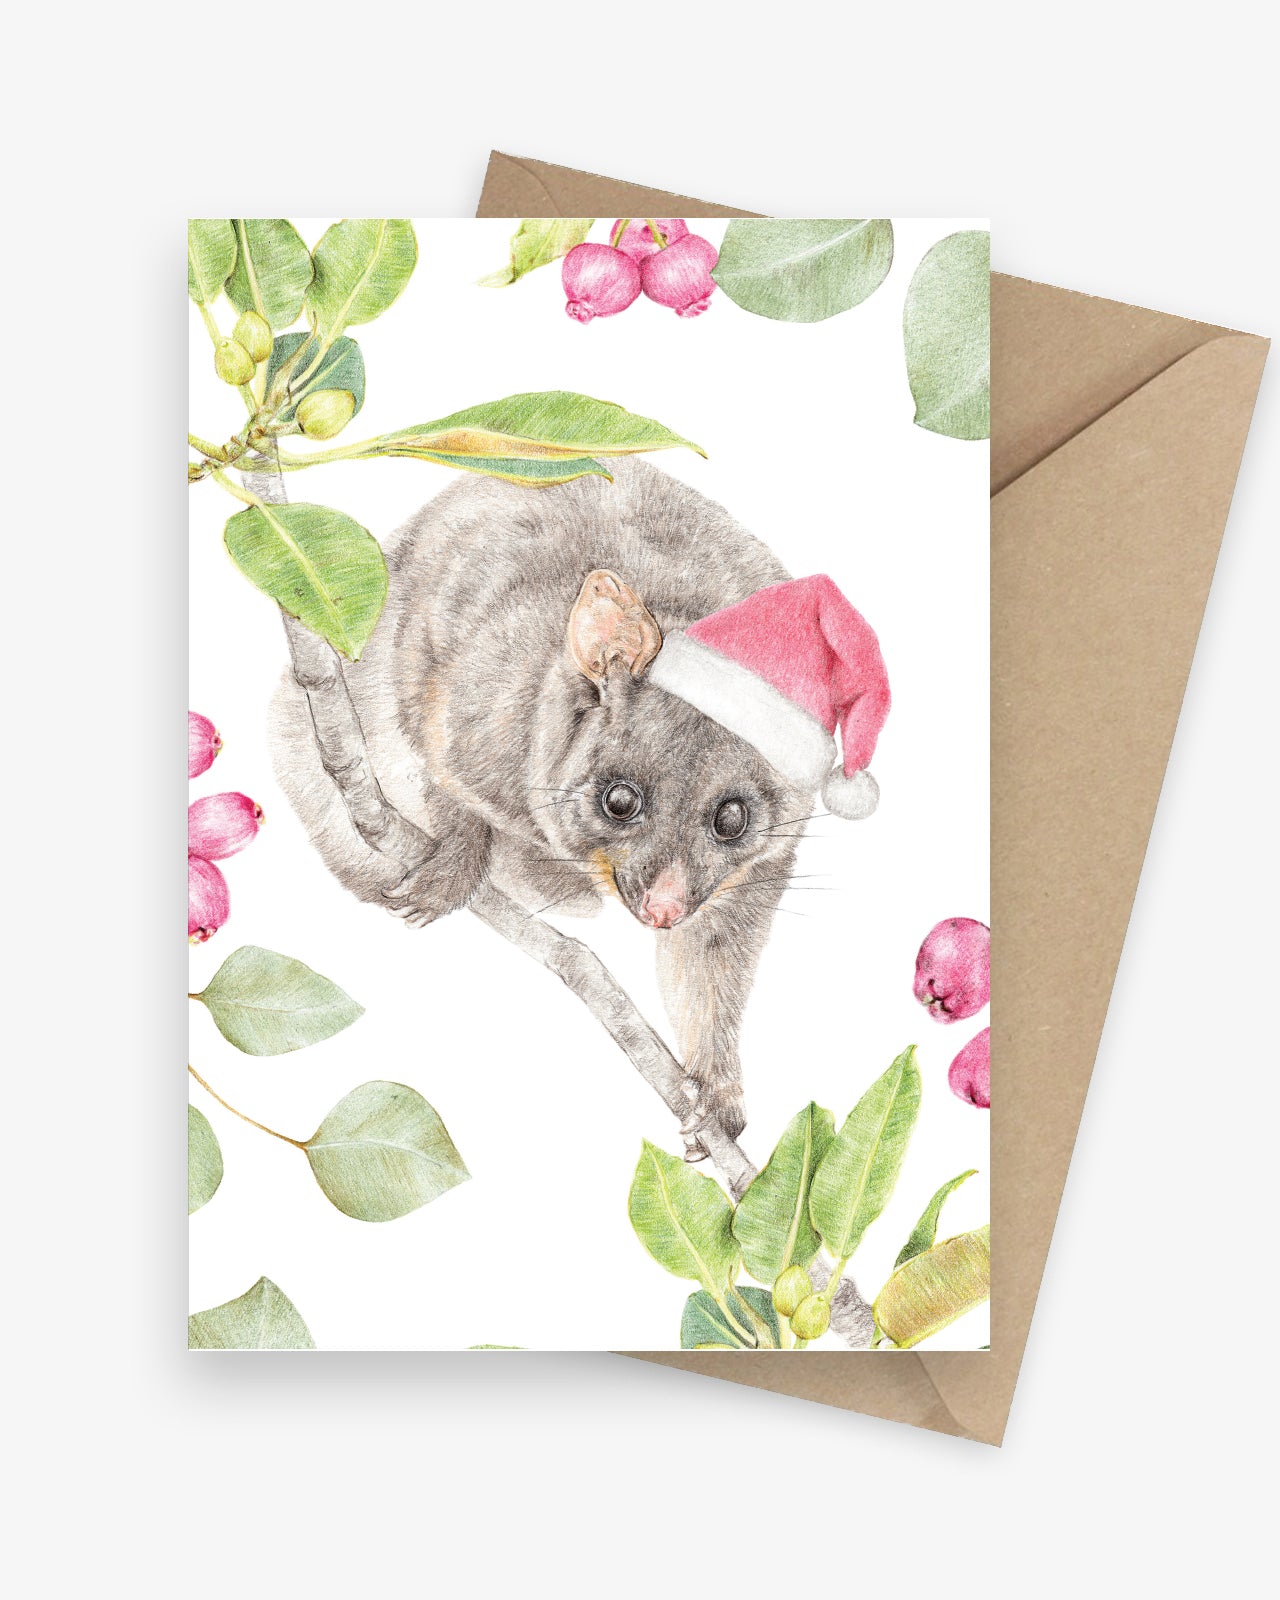 Possum Christmas Greeting Card | Australian Animal